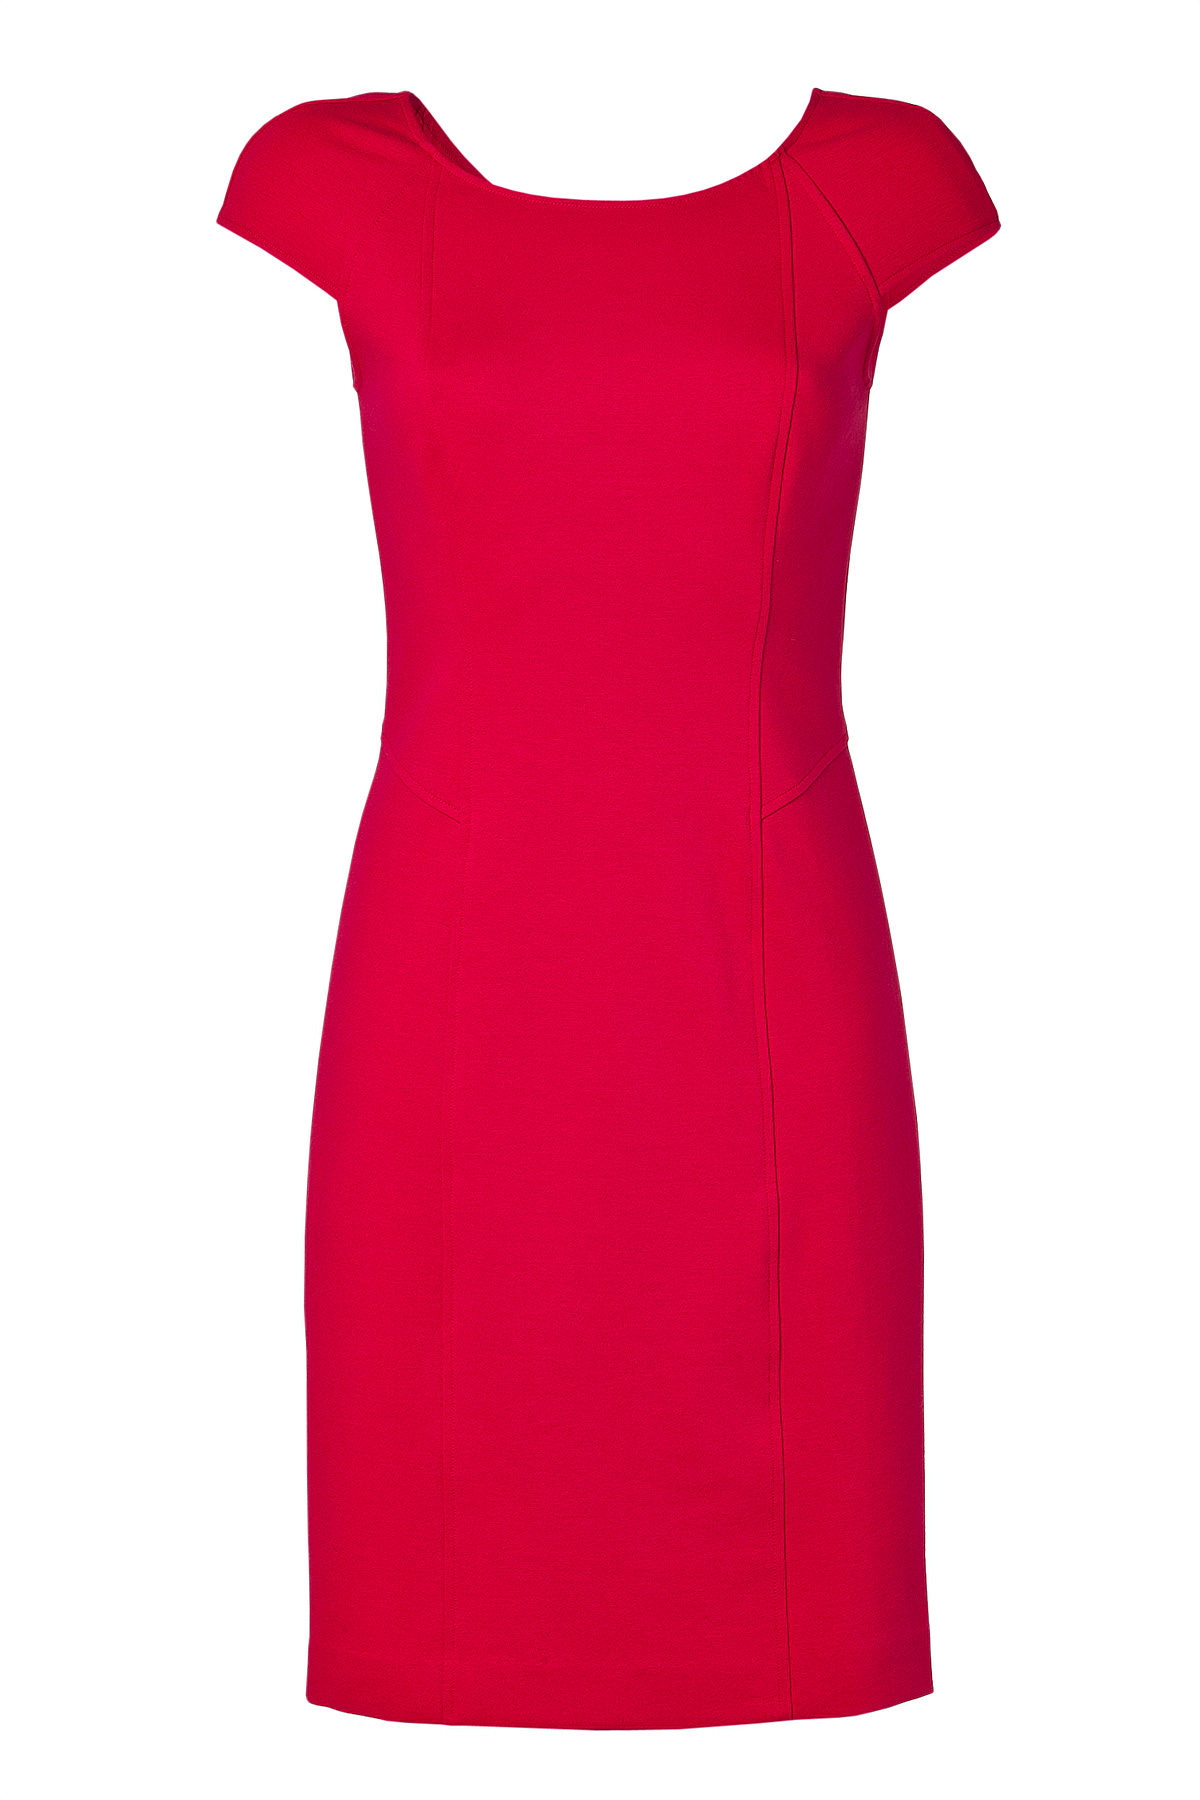 dkny red crimson red cap sleeve sheath dress product 1 4590969 548362488